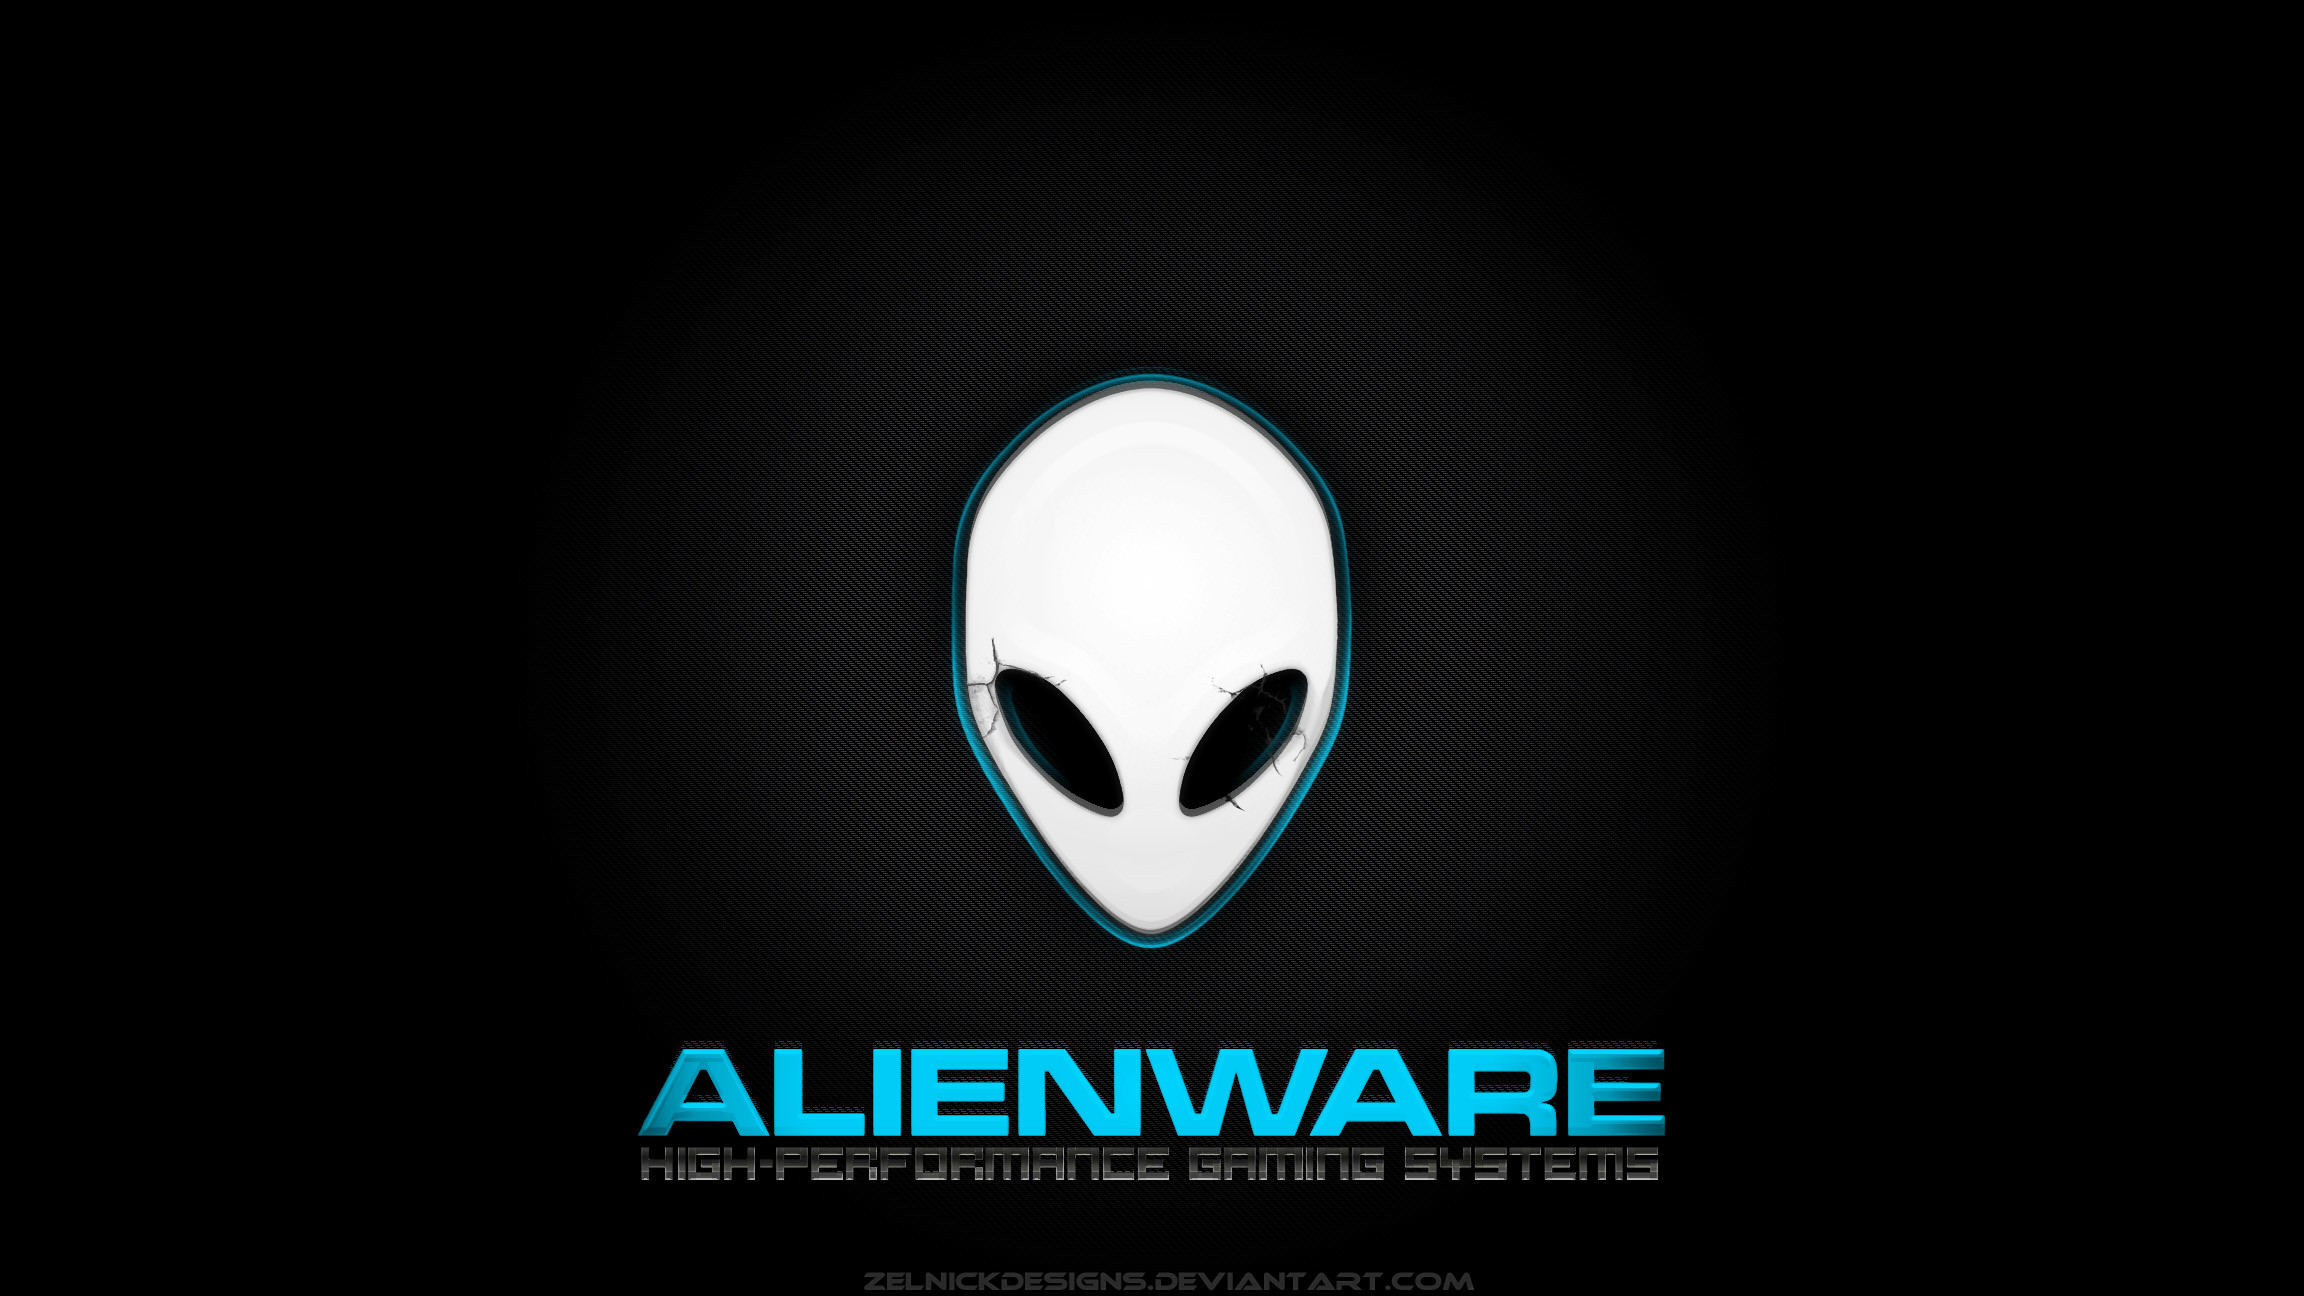 Alienware Wallpaper Pack Image